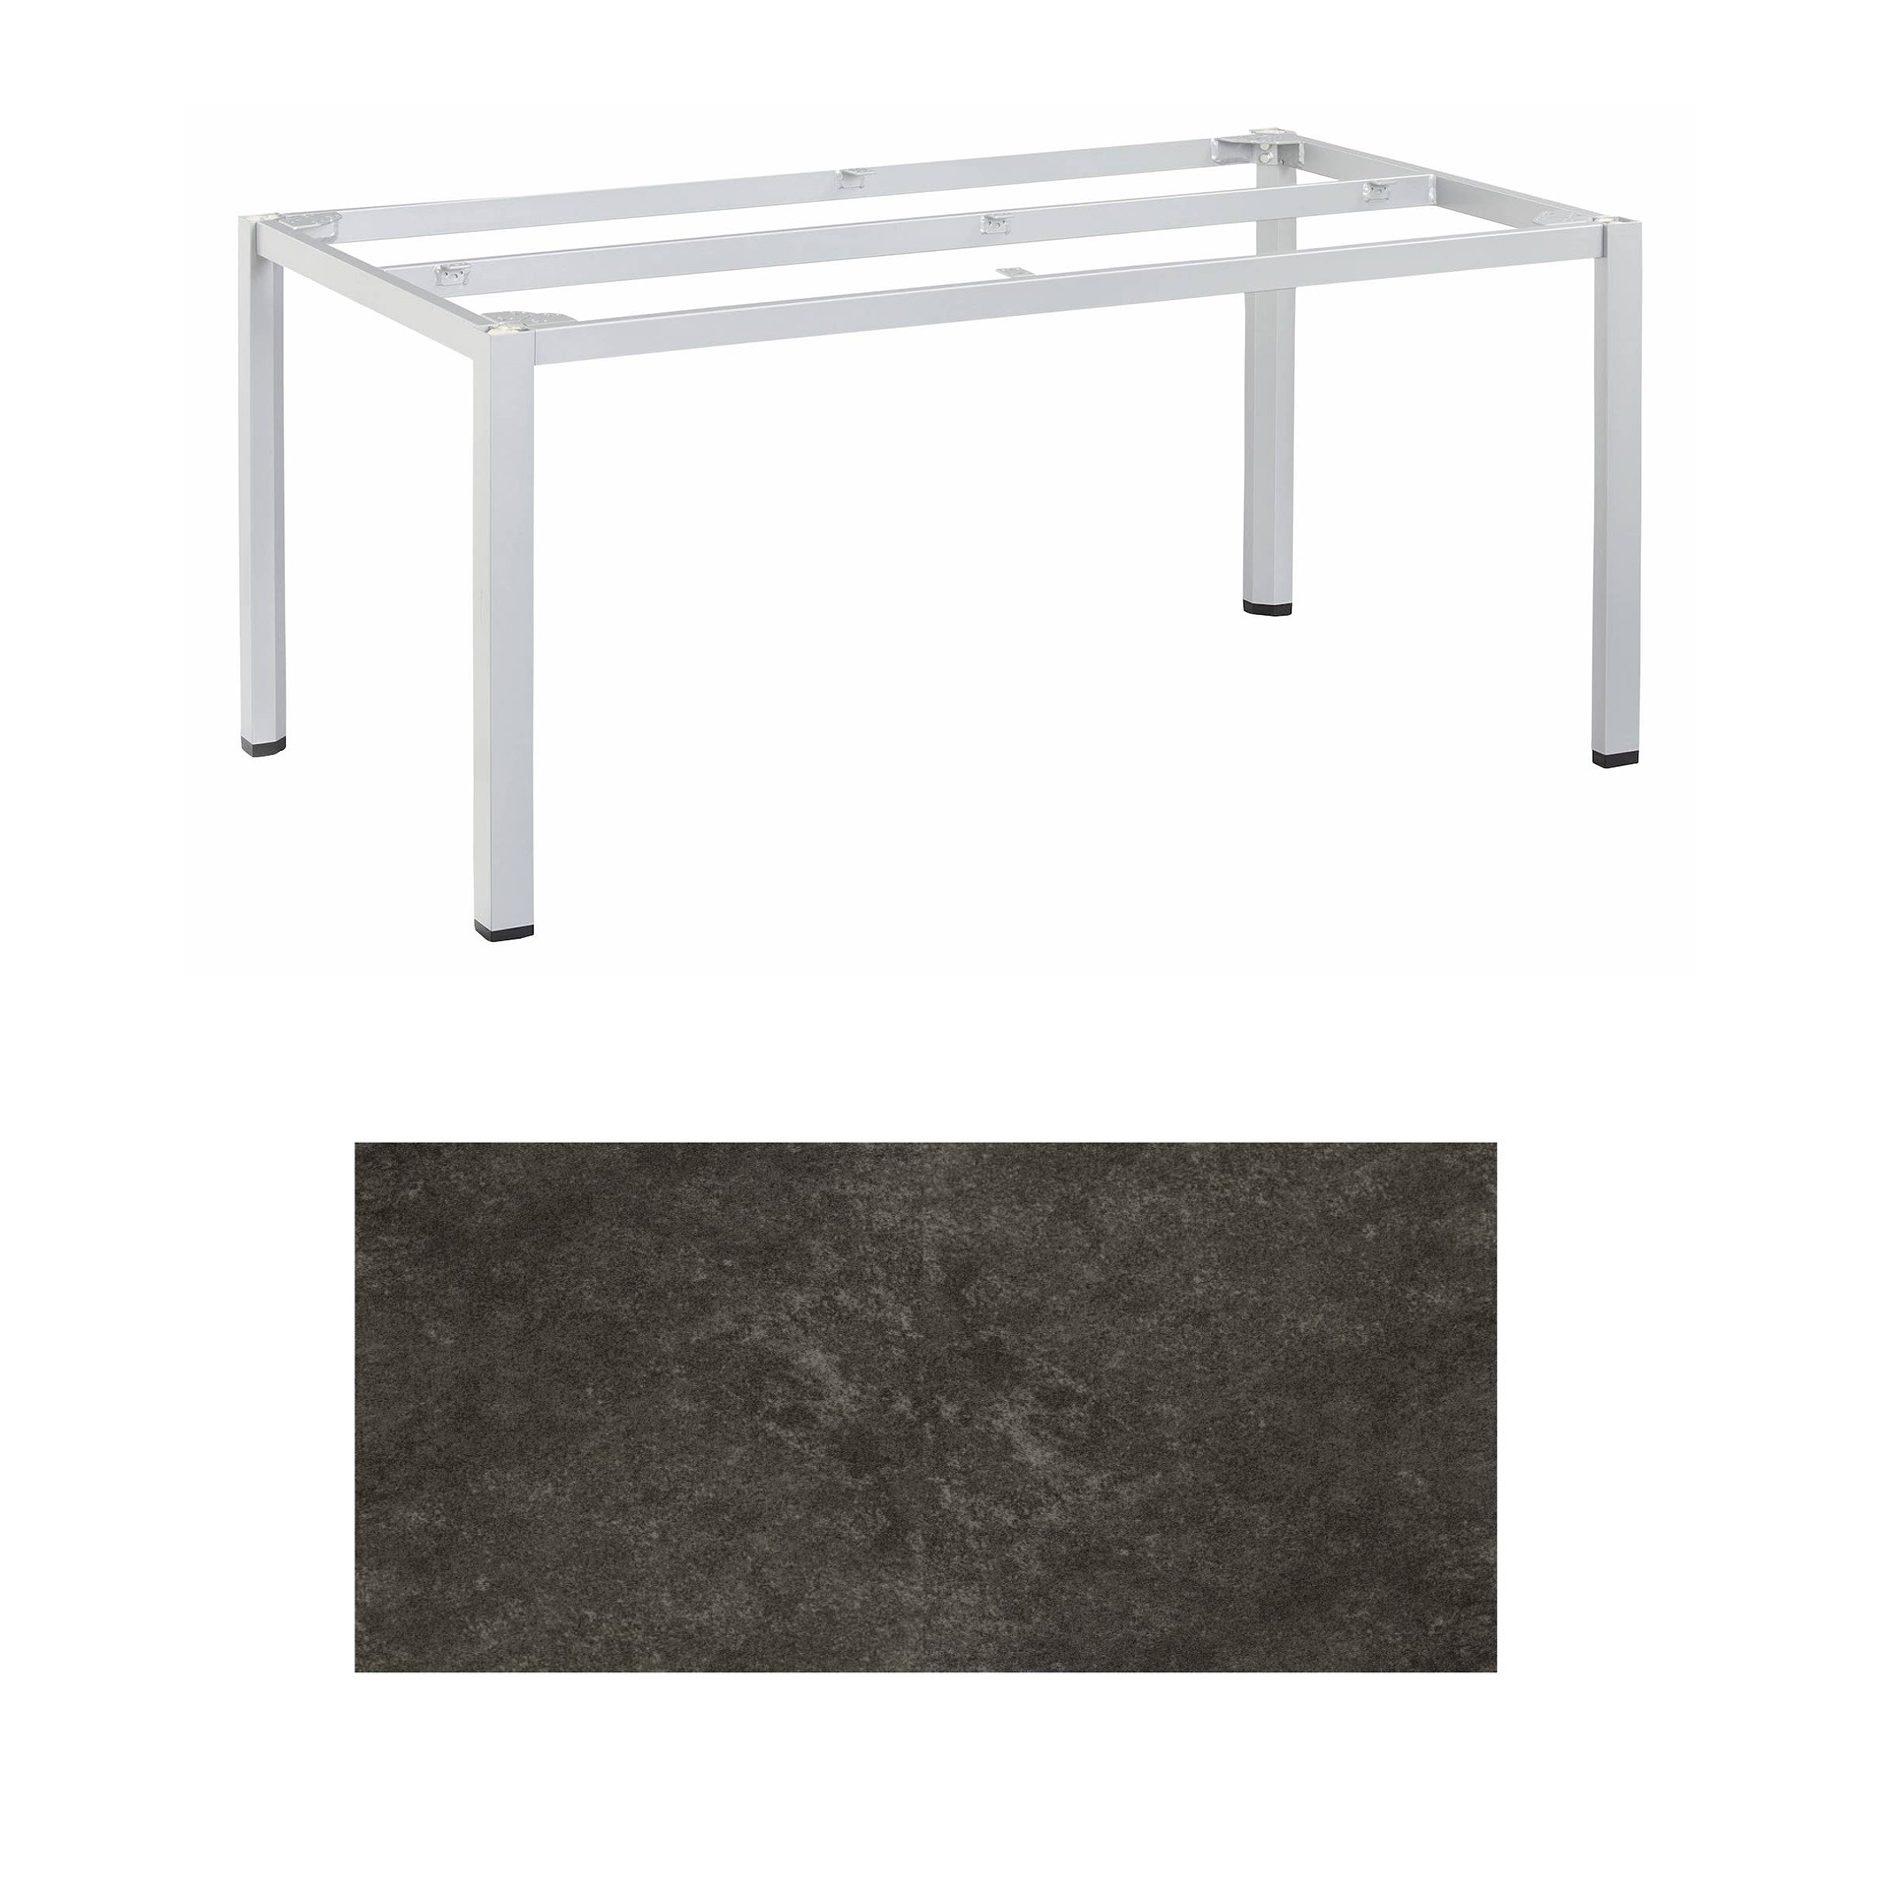 Kettler "Cubic" Tischgestell 160x95 cm, Aluminium silber mit Keramik-Platte anthrazit